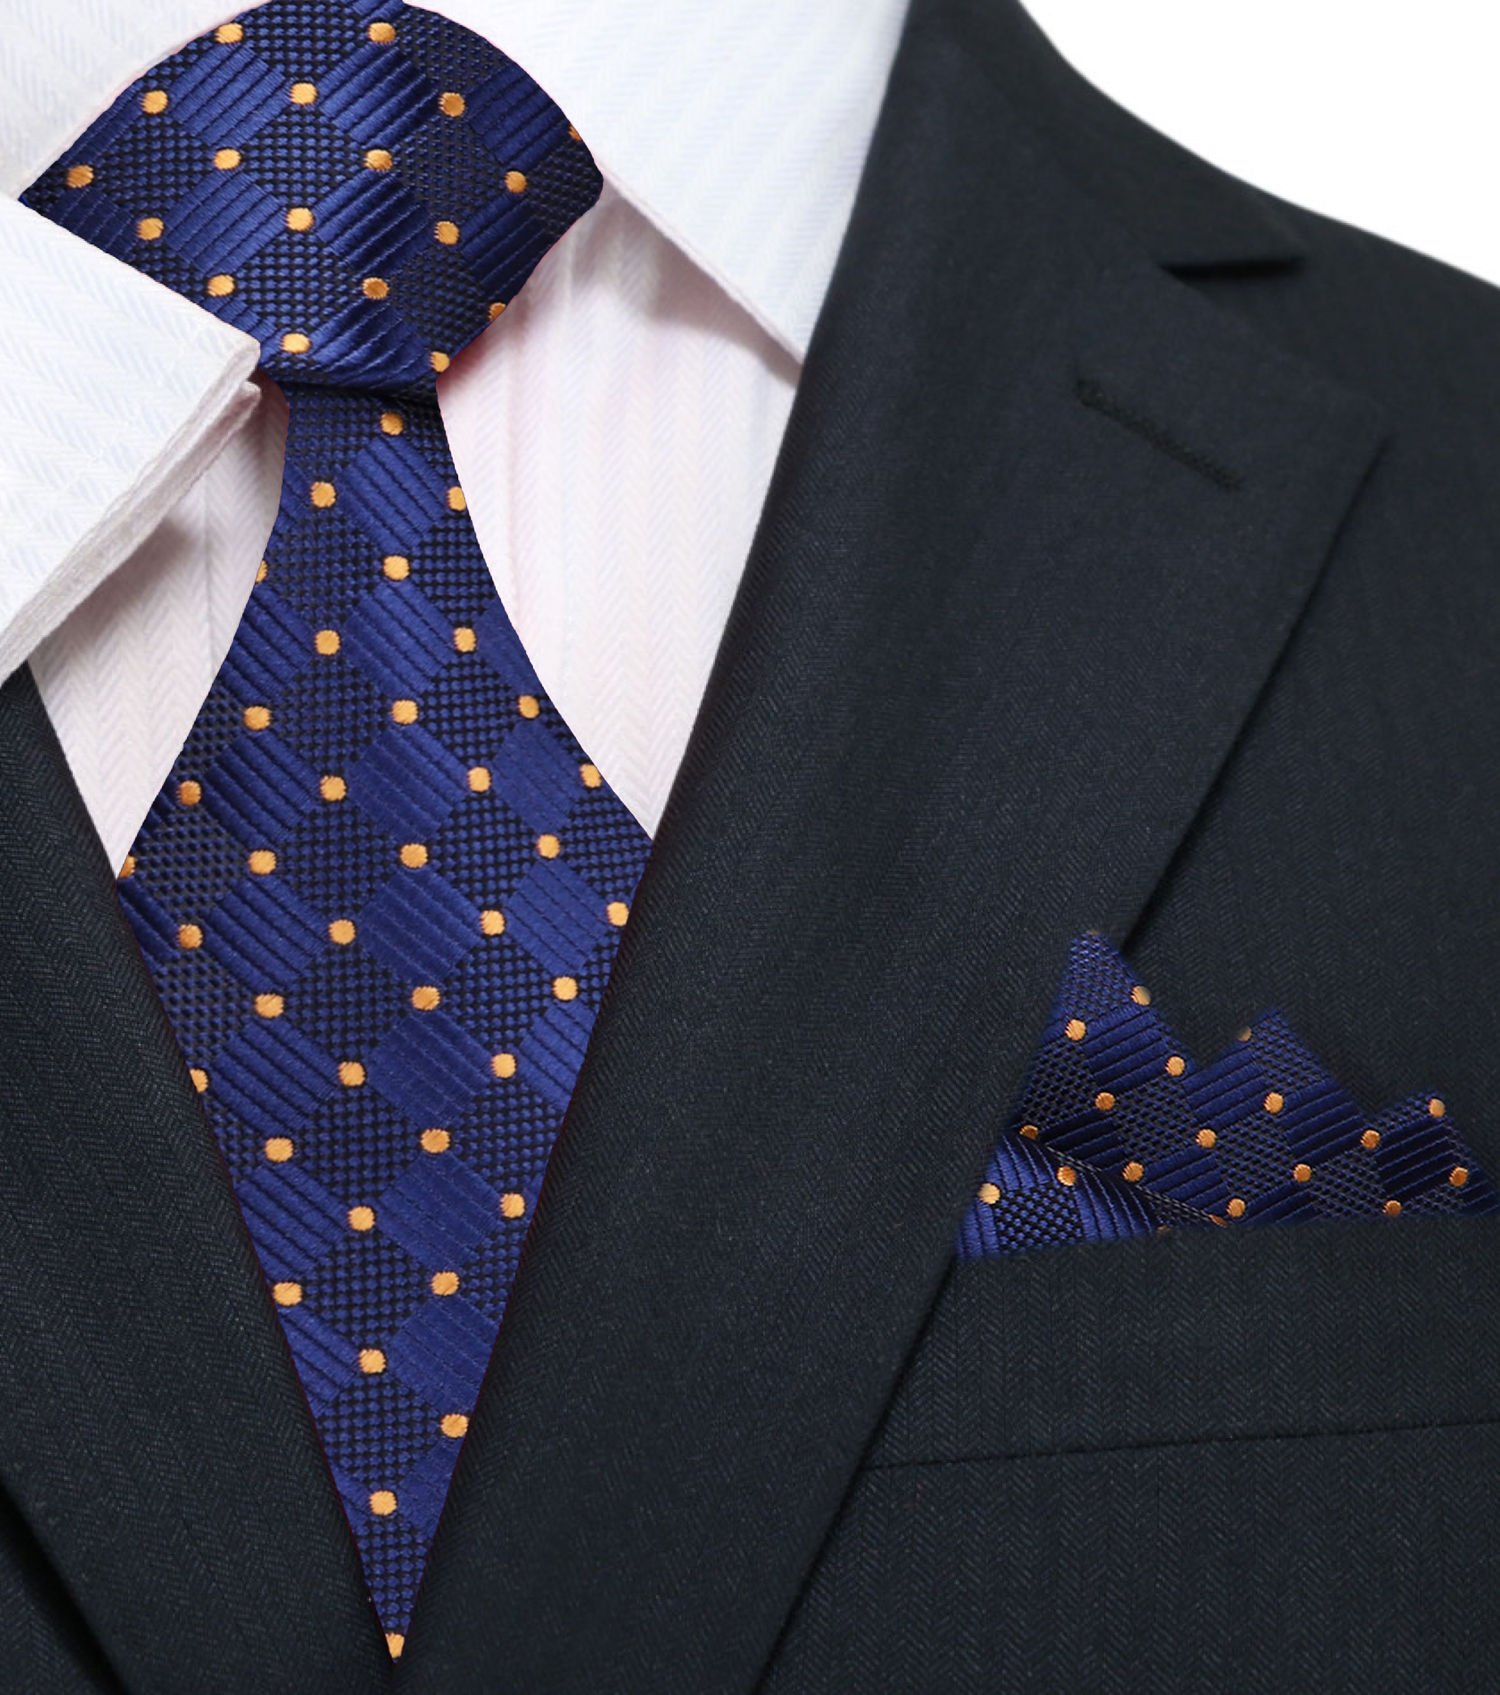 Main: A Dark Blue Geometric Diamond With Small Dots Pattern Silk Necktie With Matching Pocket Square||Deep Blue, Golden Orange